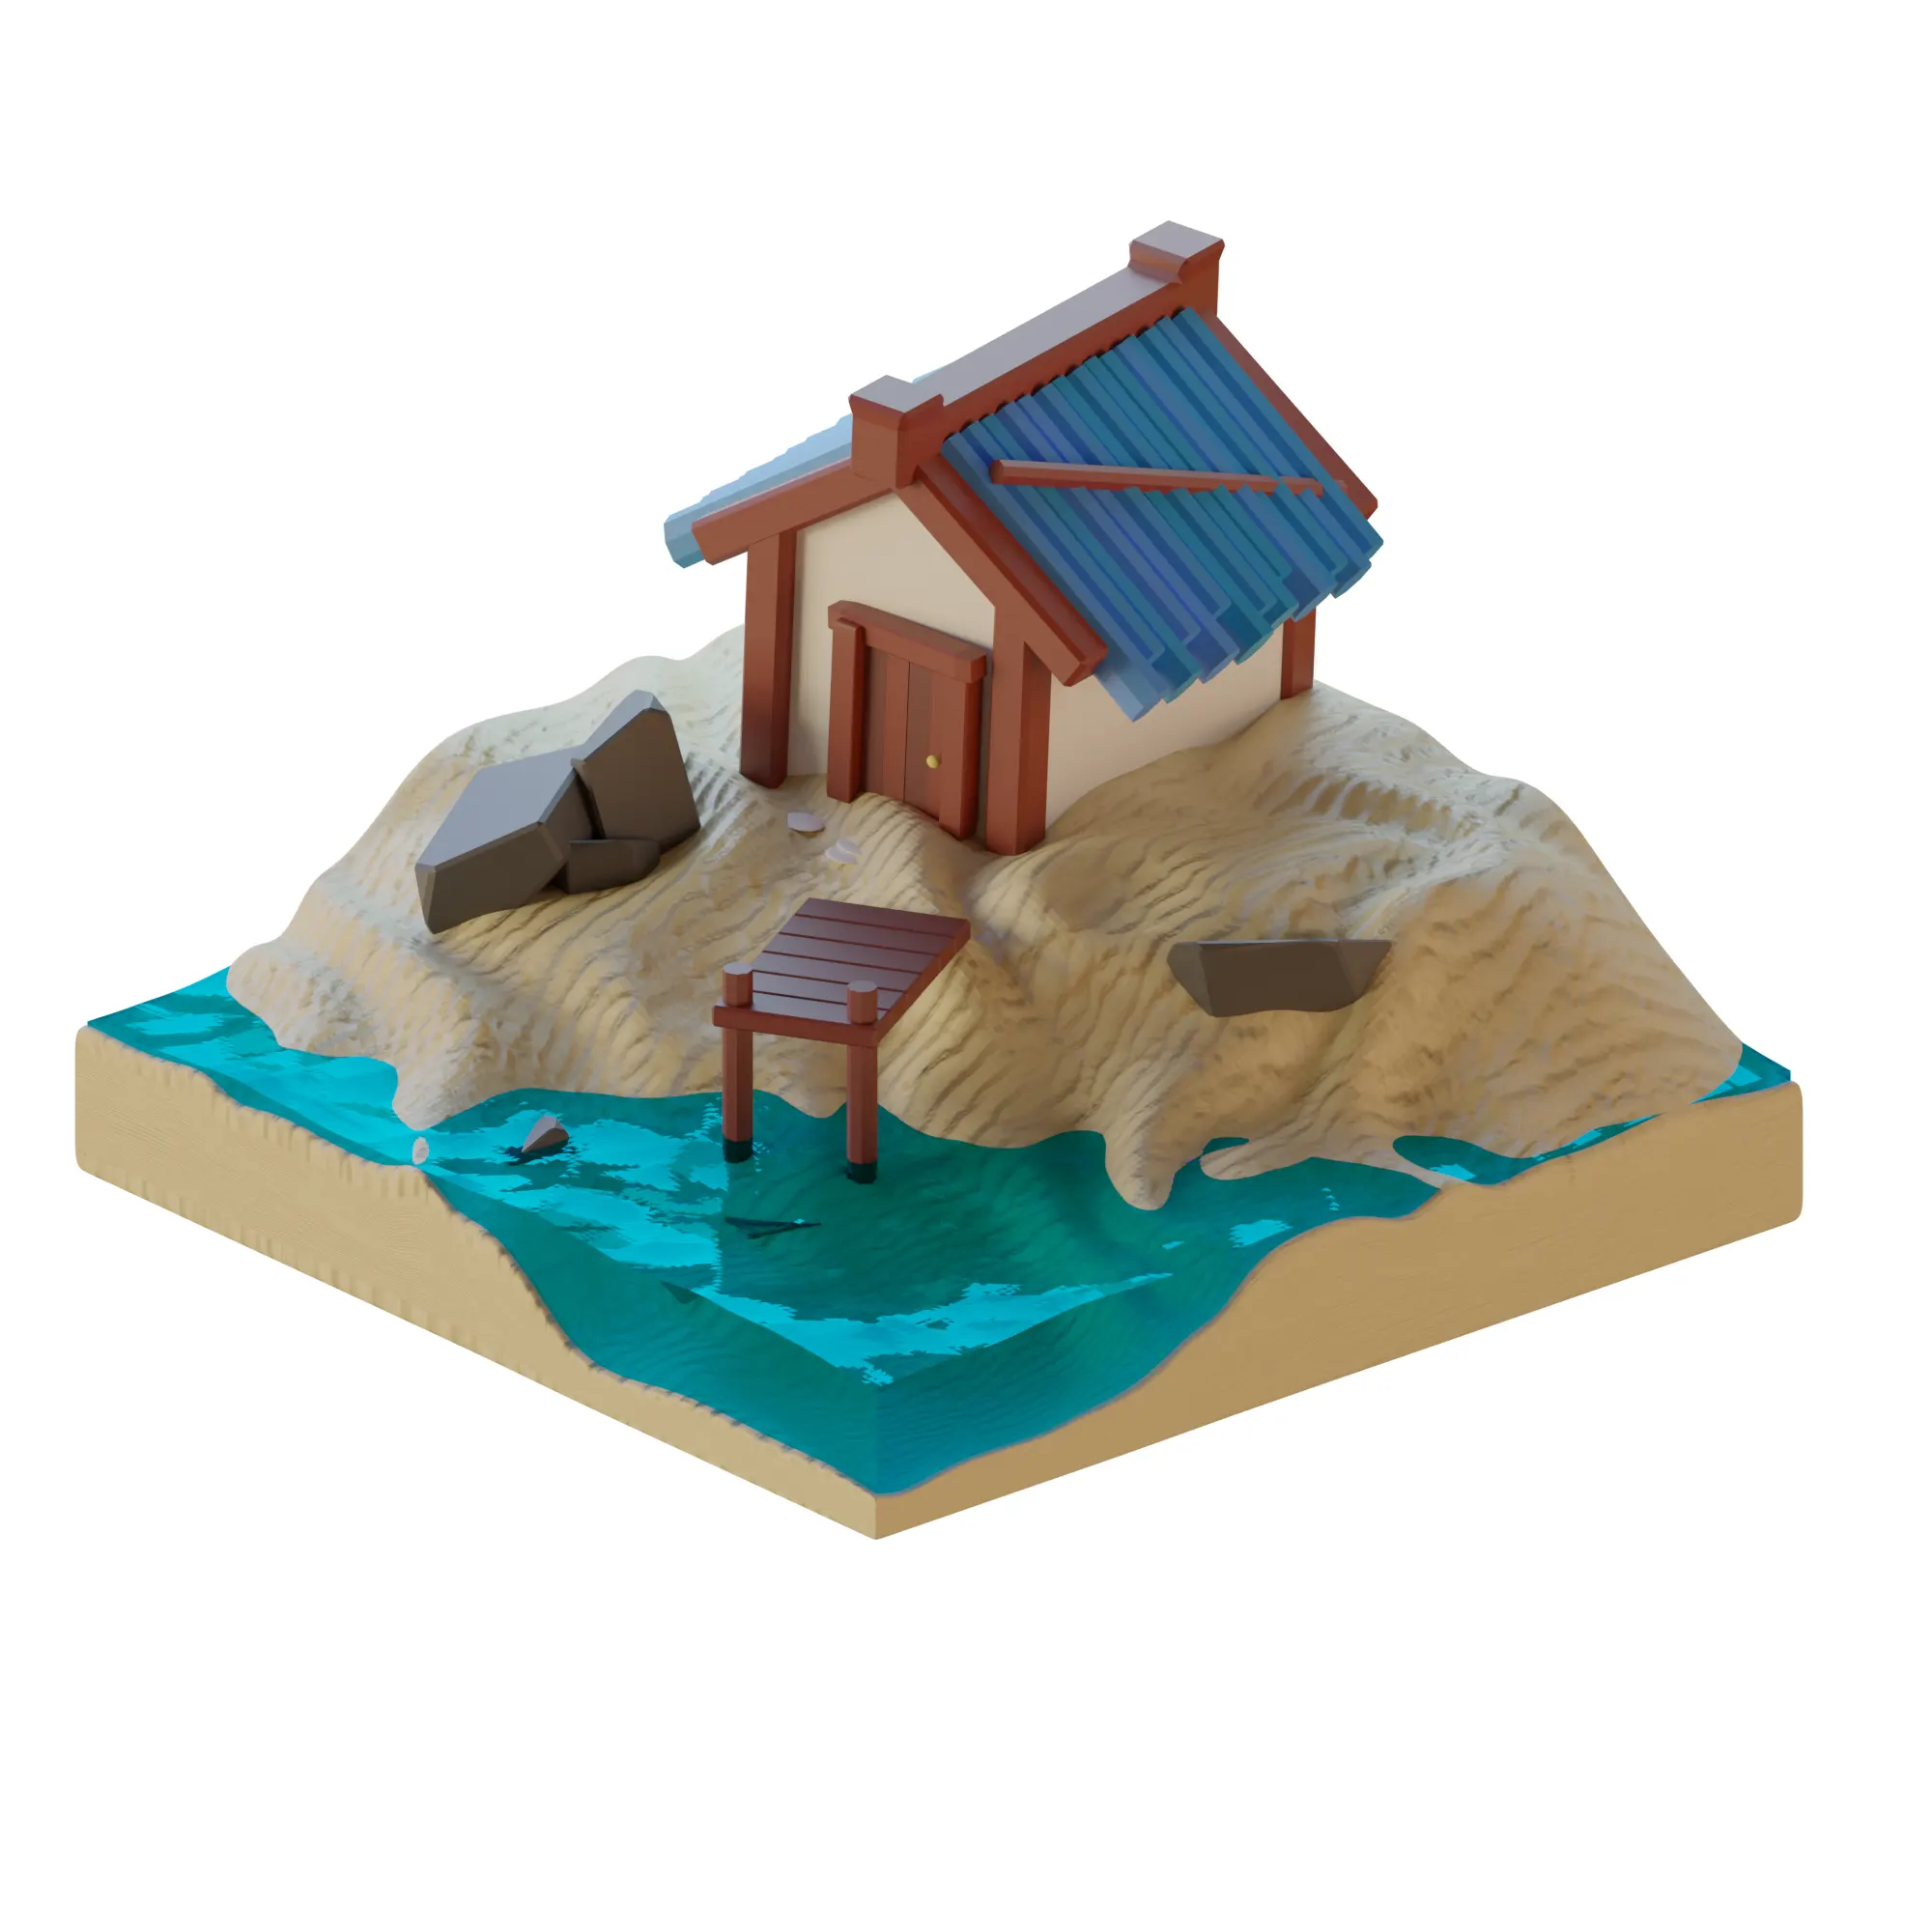 Small beach house 3D model download on cg.market Blender